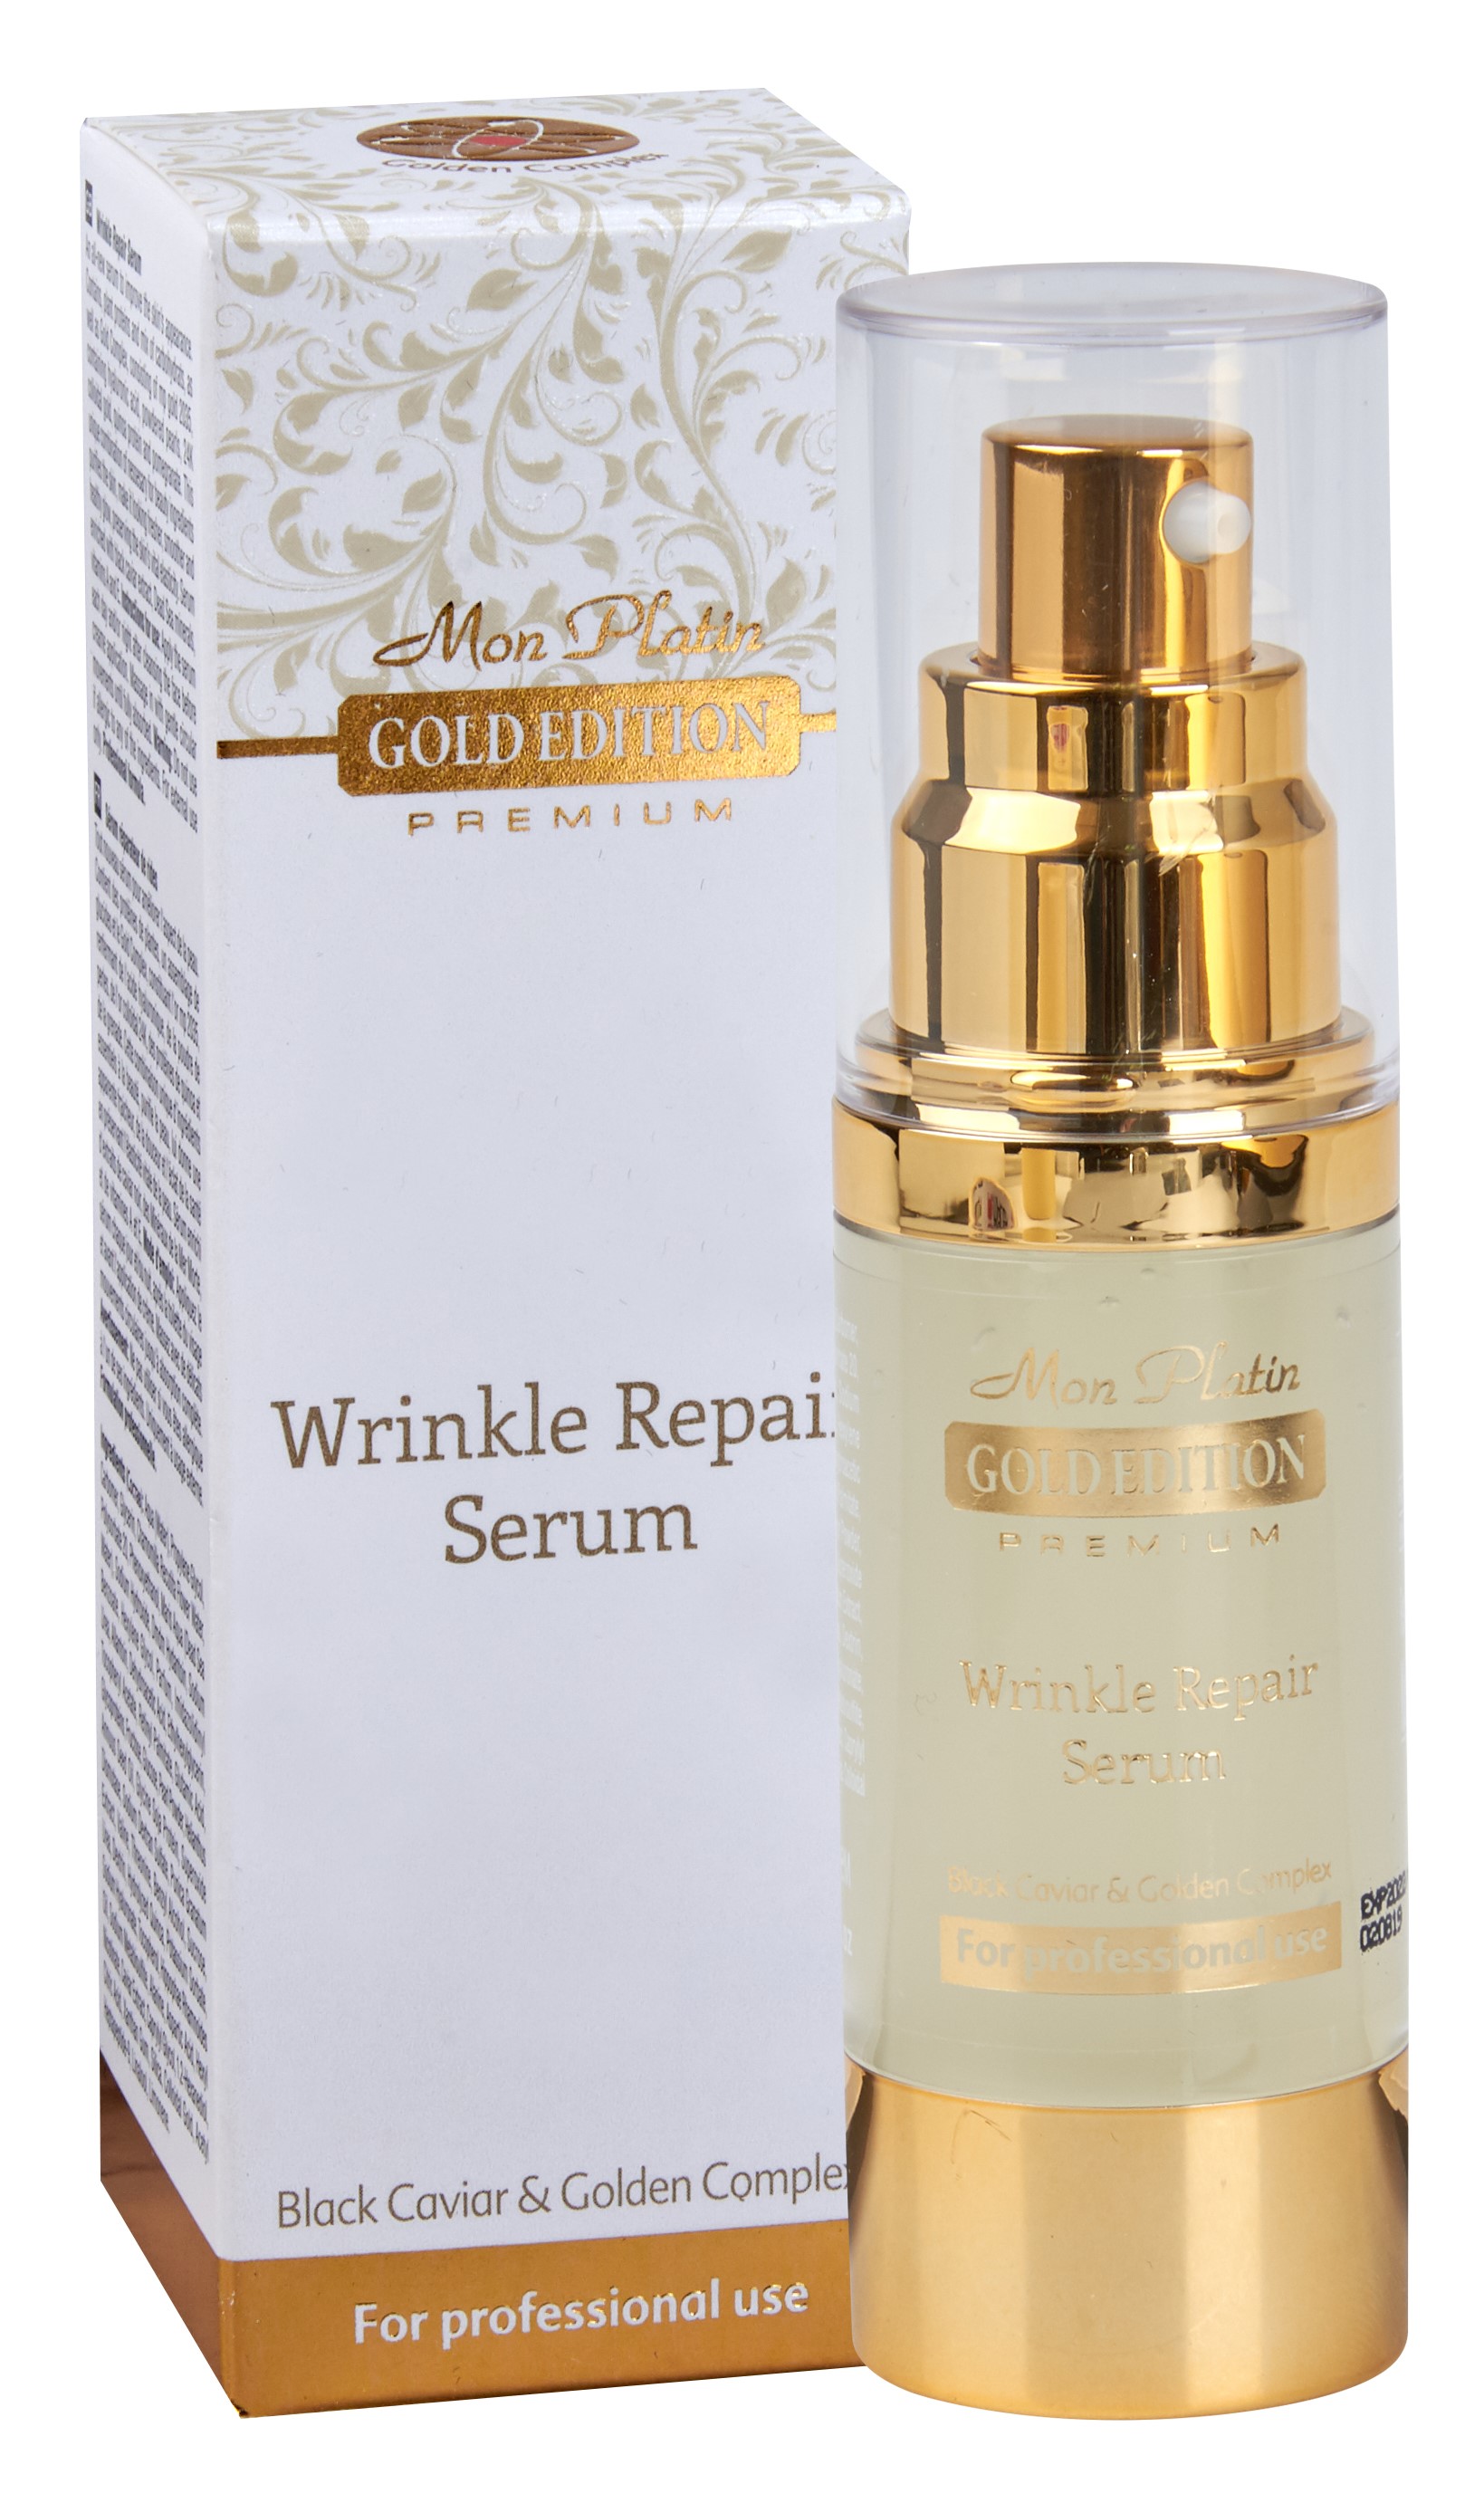 Gold edition wrinkle repair serum